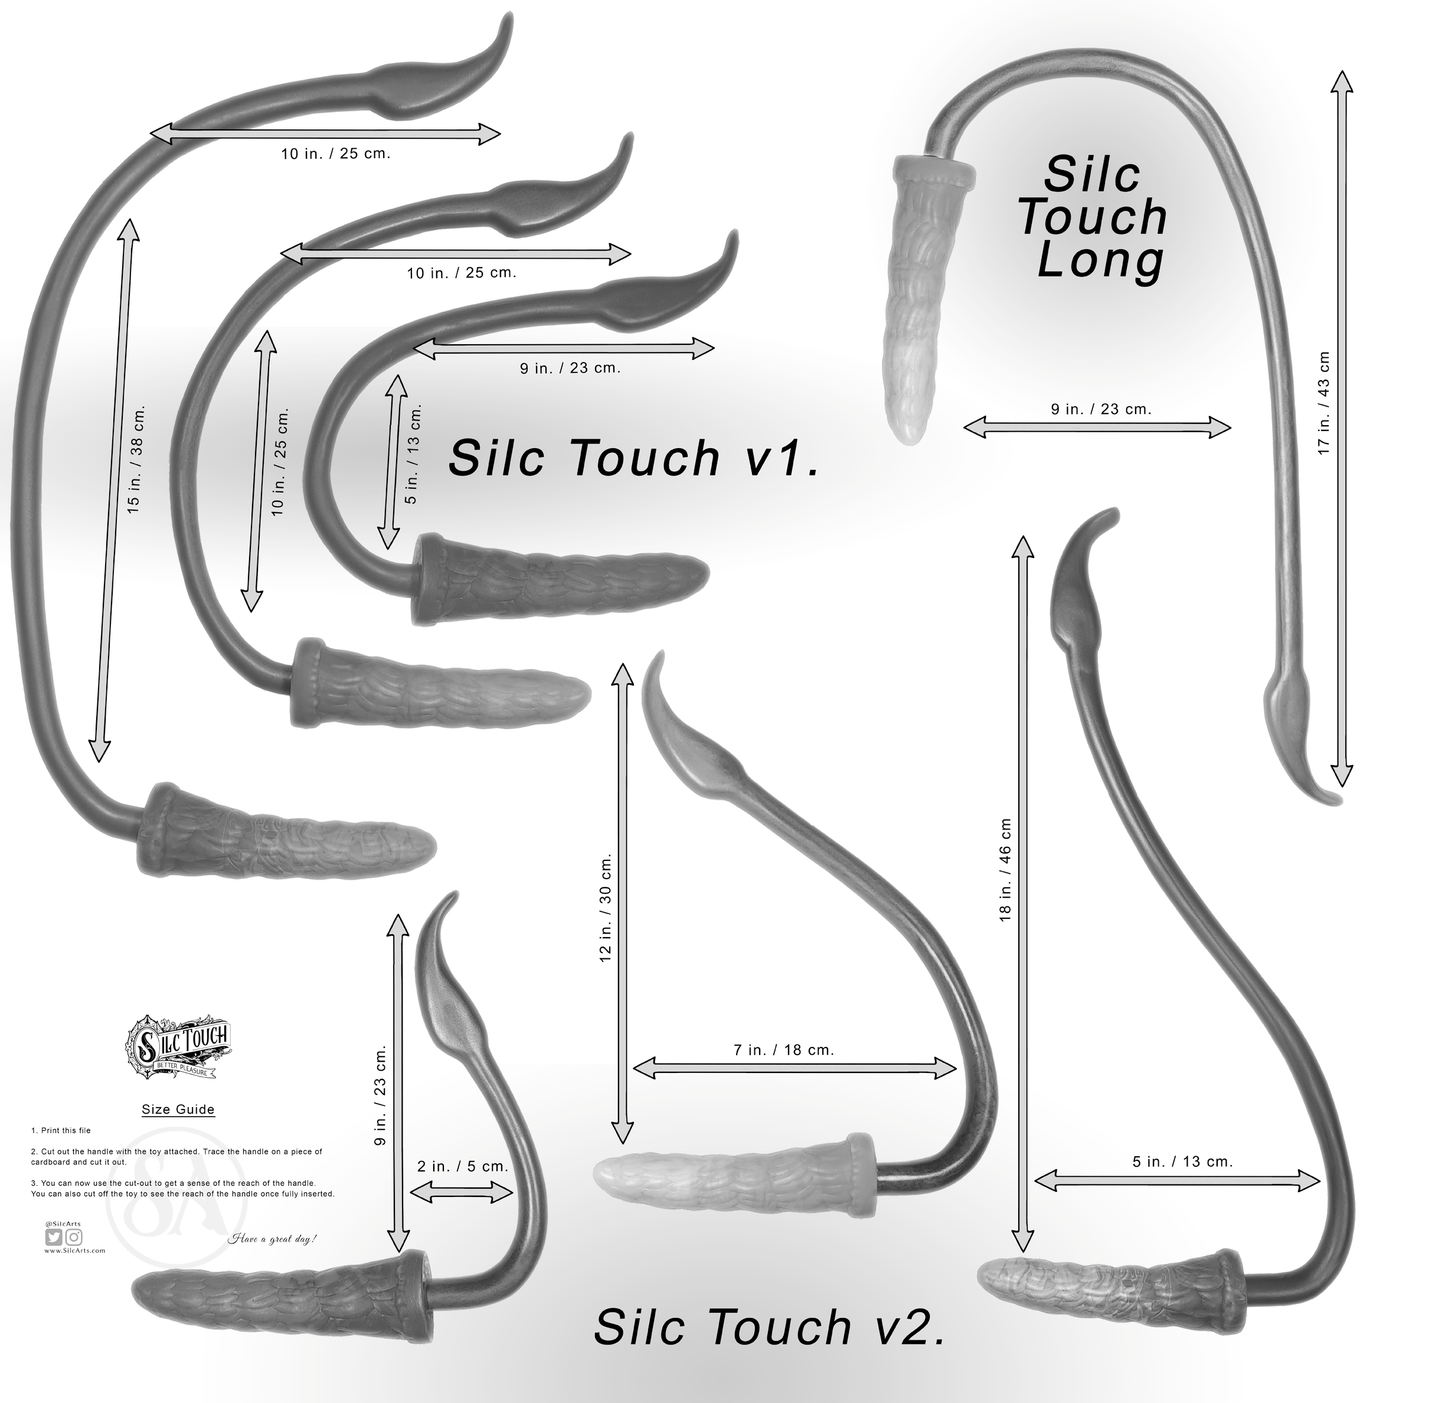 Silc Touch v1. - Ergonomic handle - VacLoc - Sm